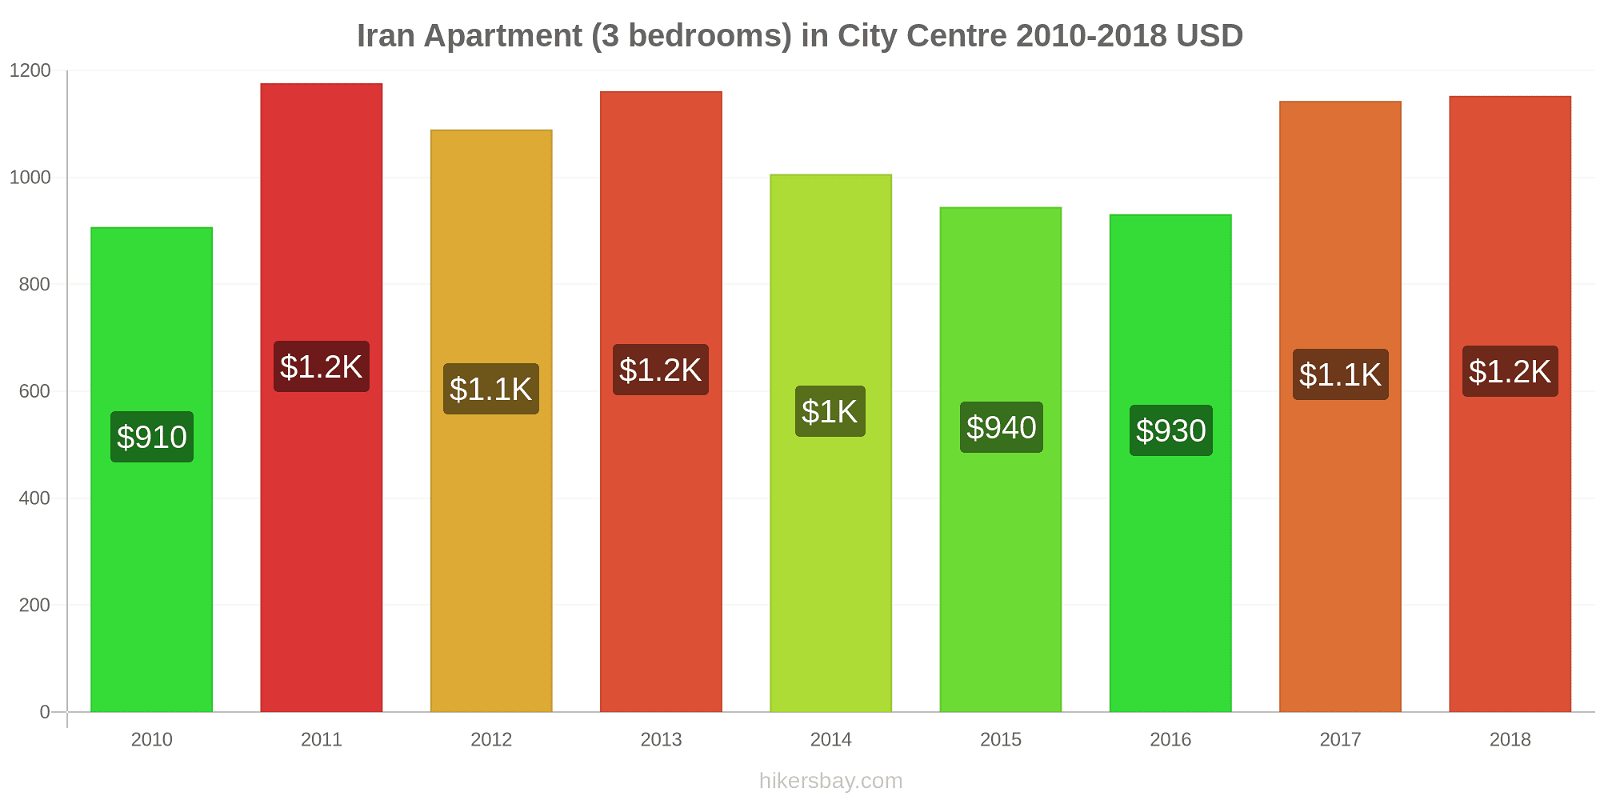 Iran price changes Apartment (3 bedrooms) in City Centre hikersbay.com